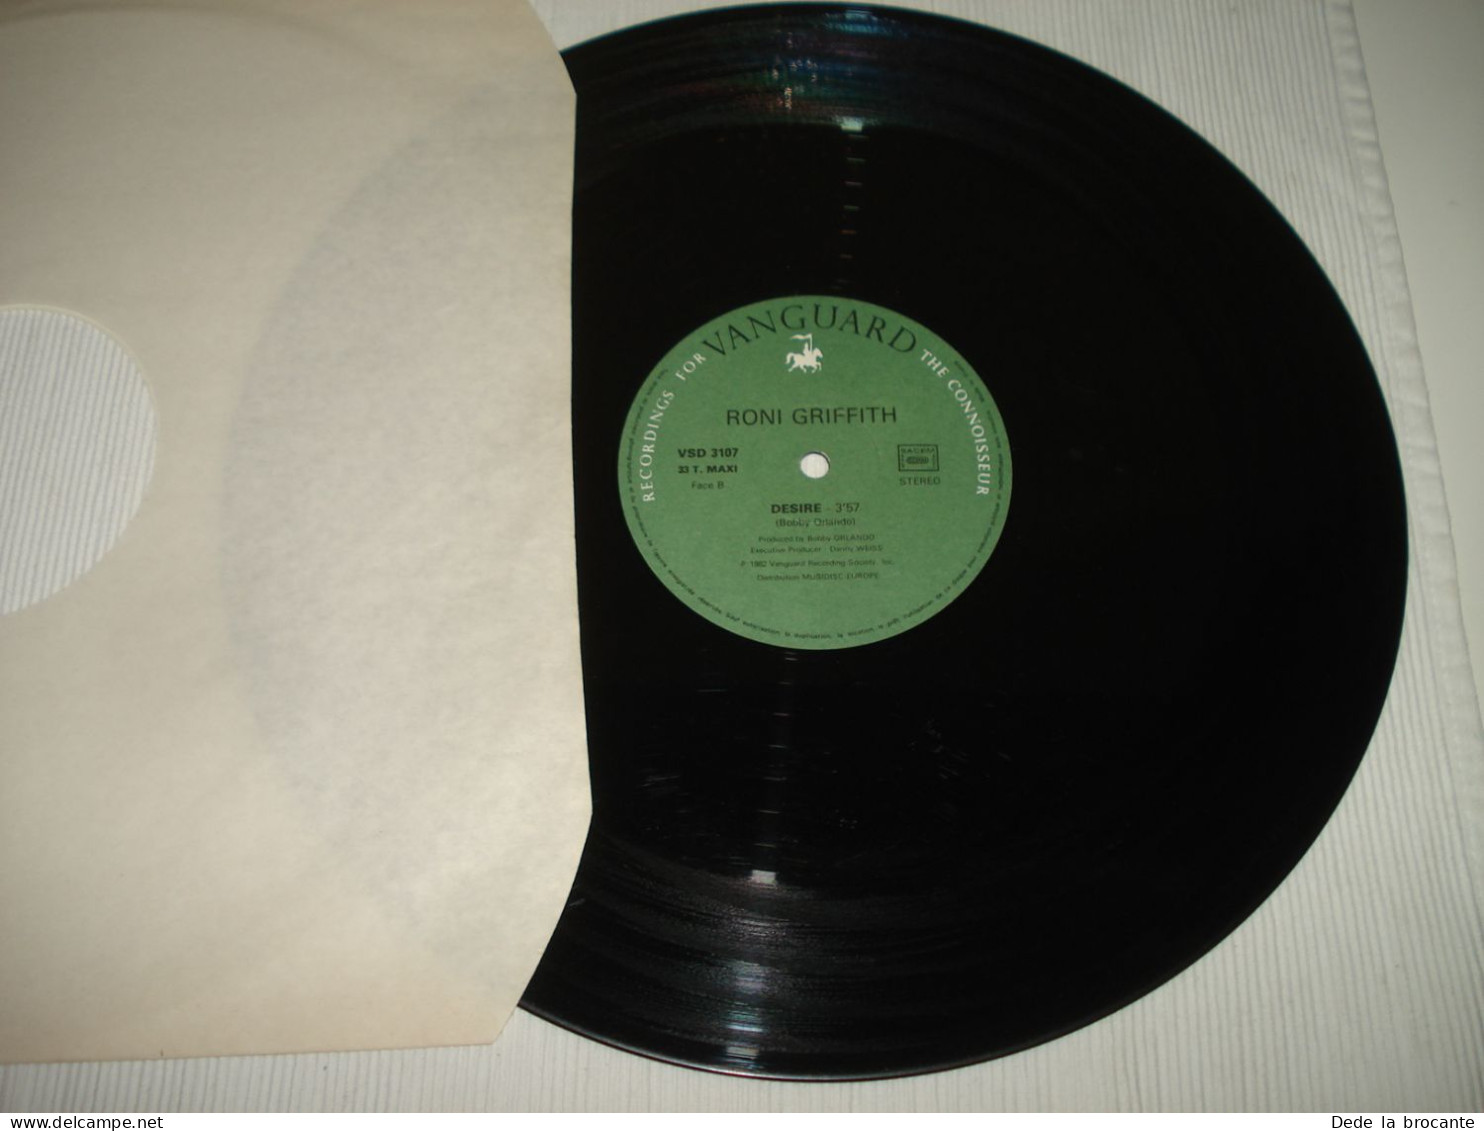 B8 / Roni Griffith – Breakin' Up  Desir - Maxi Single 33T - VSD 3107 - FR - 1982 - Formati Speciali